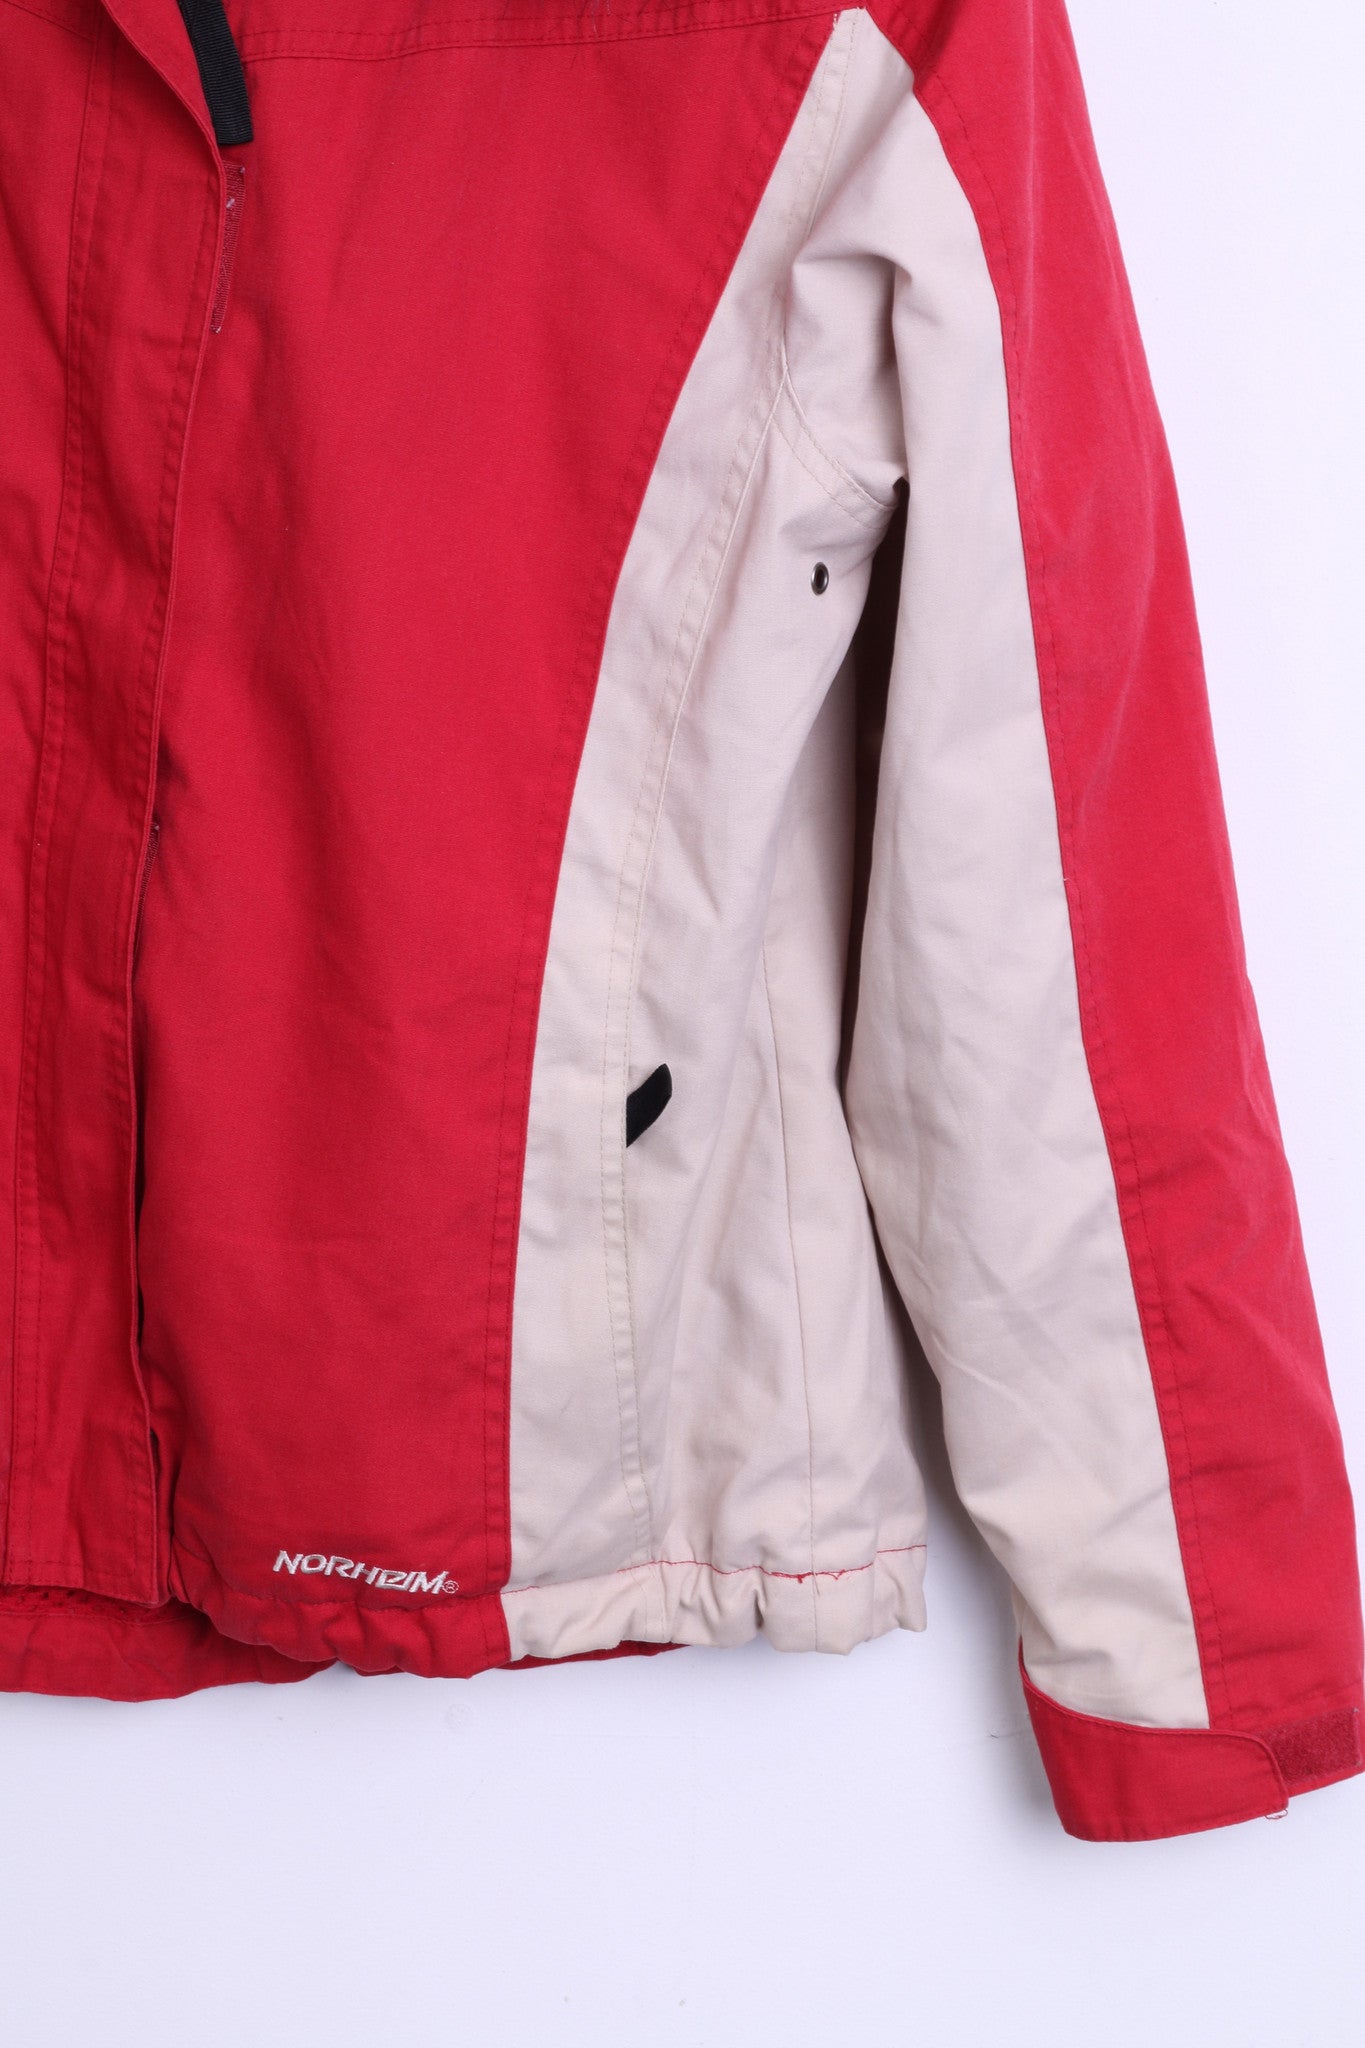 Norheim Womens S/M Jacket Hood Red Cream Sides Fur On The Hood - RetrospectClothes